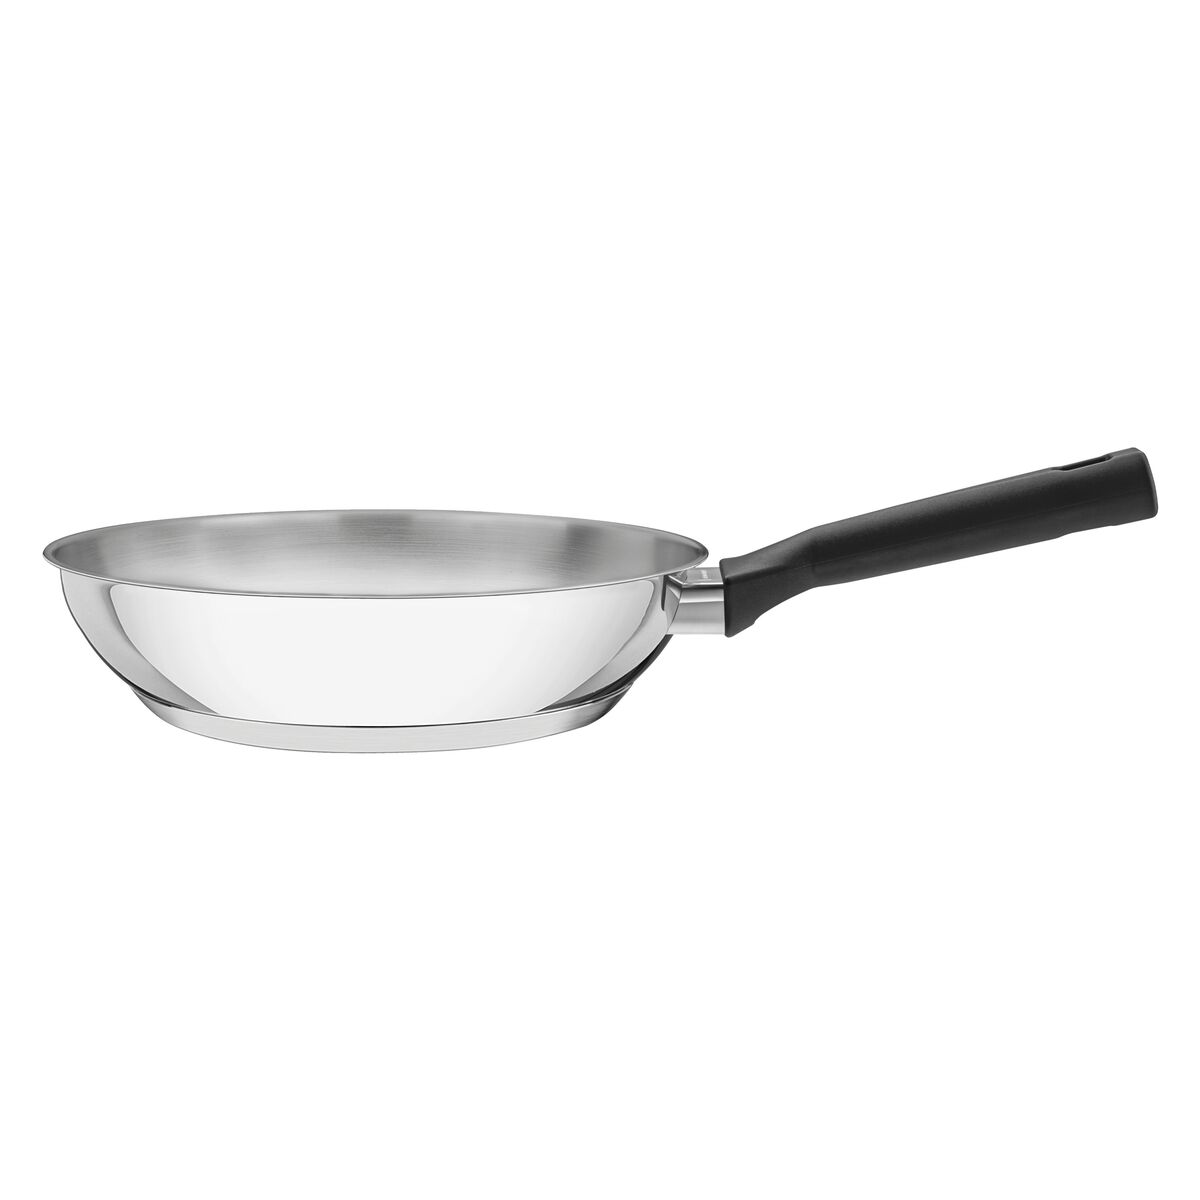 Tramontina Brava Bakelite stainless steel frying pan, long handle and tri-ply base, 24 cm 2.1 L